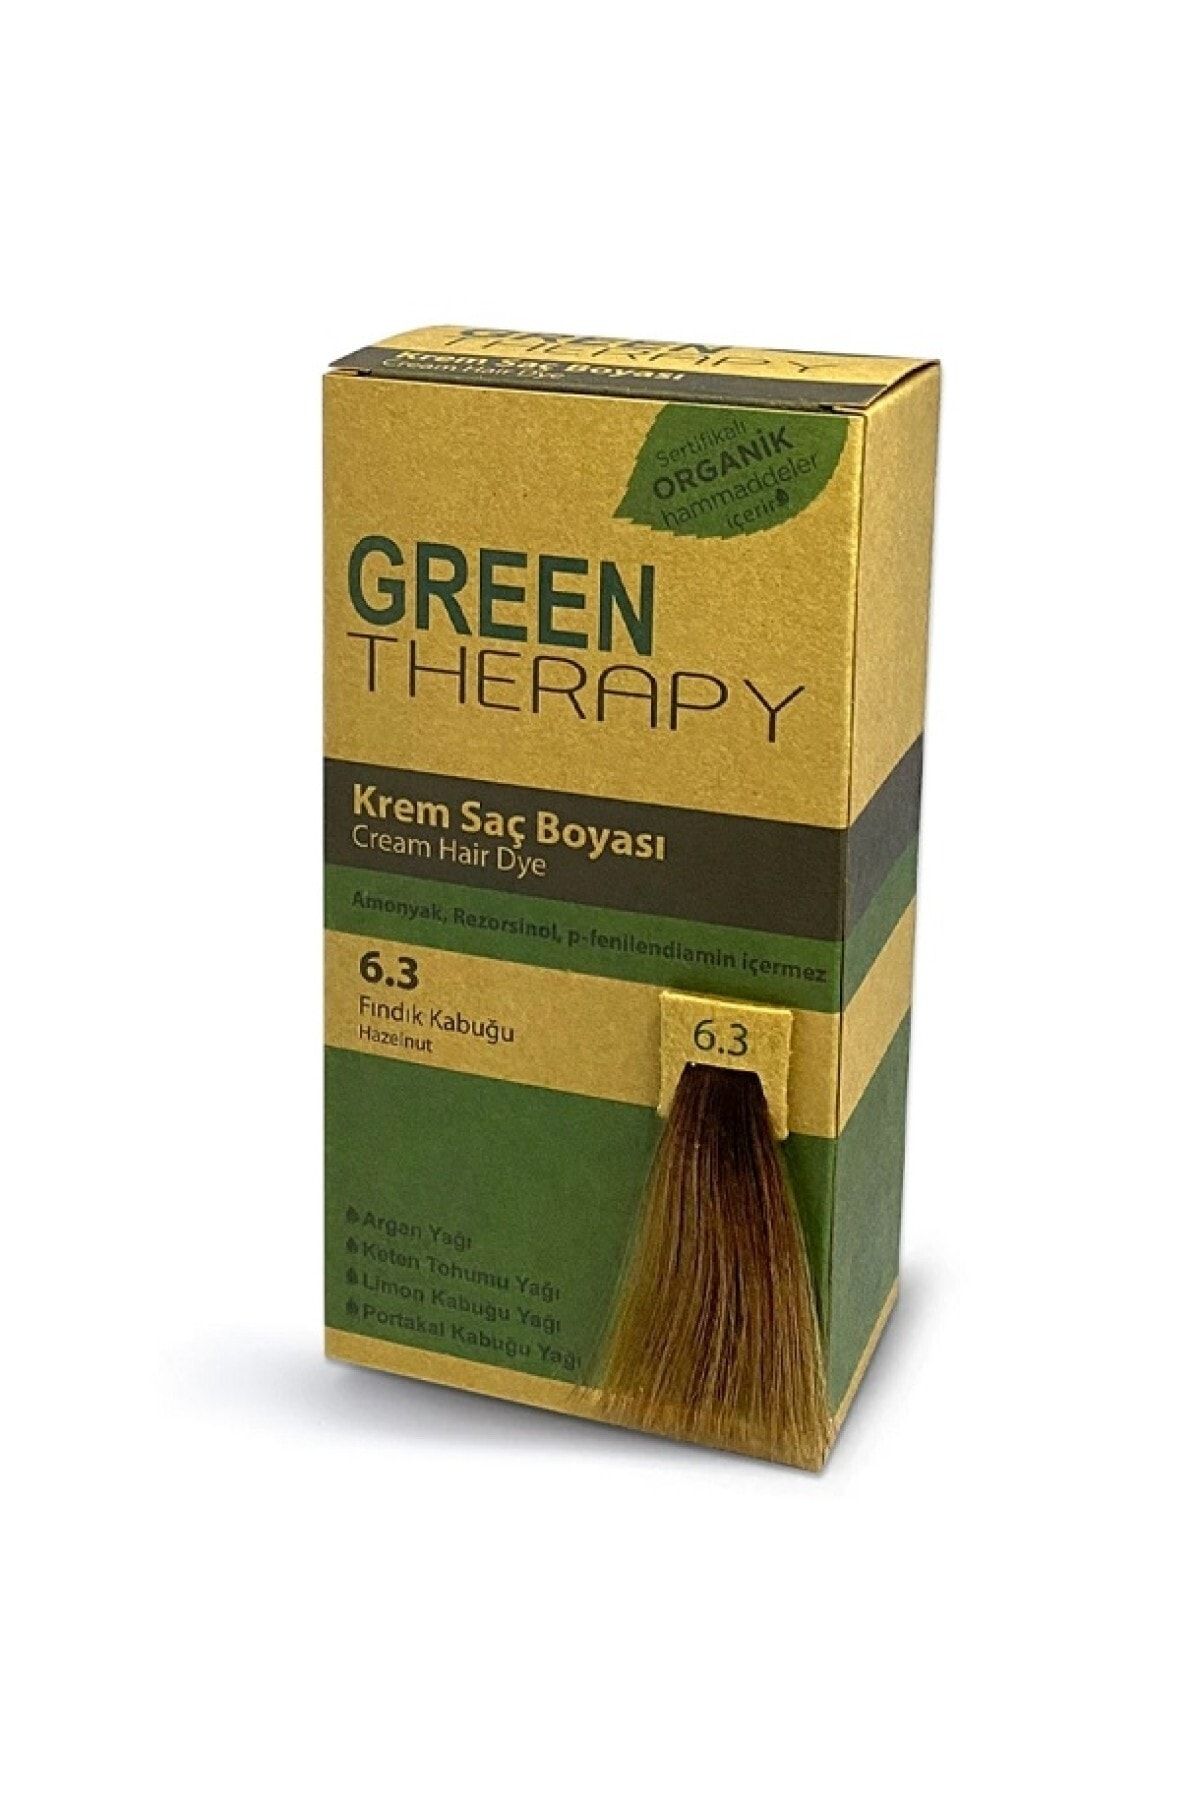 Green Therapy Krem Saç Boyası 6.3 Fındık Kabuğu